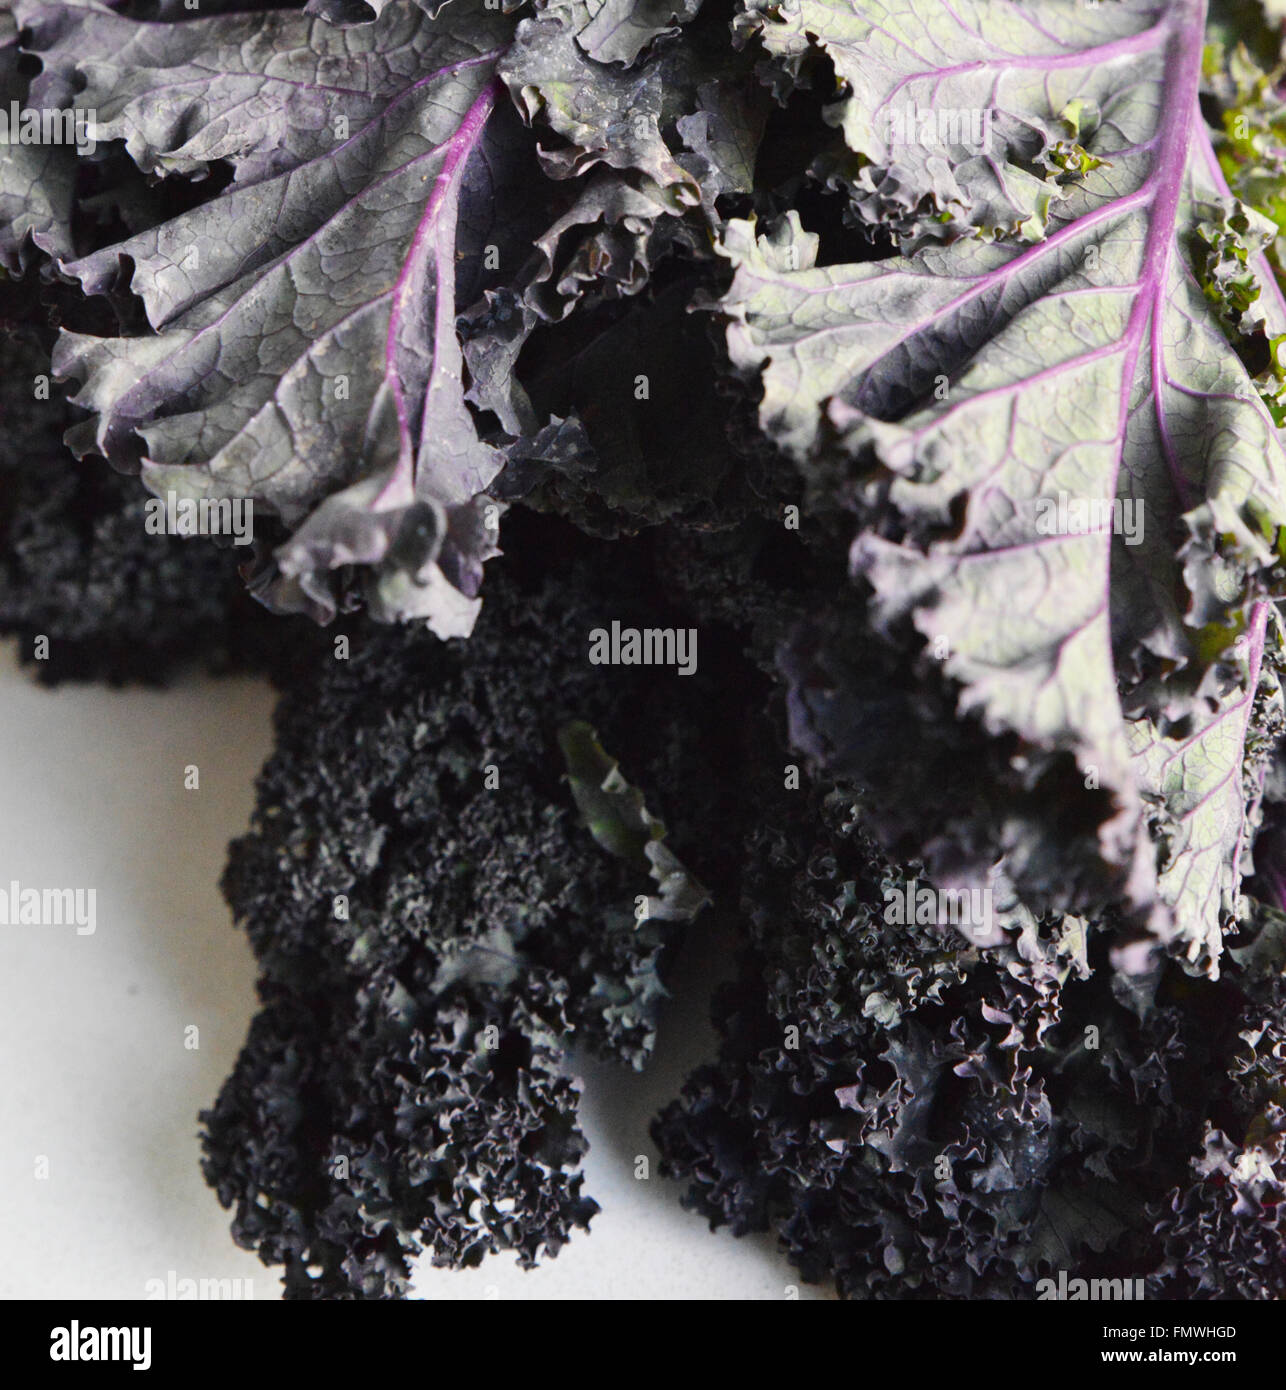 Kale. Purple Kale. Stock Photo